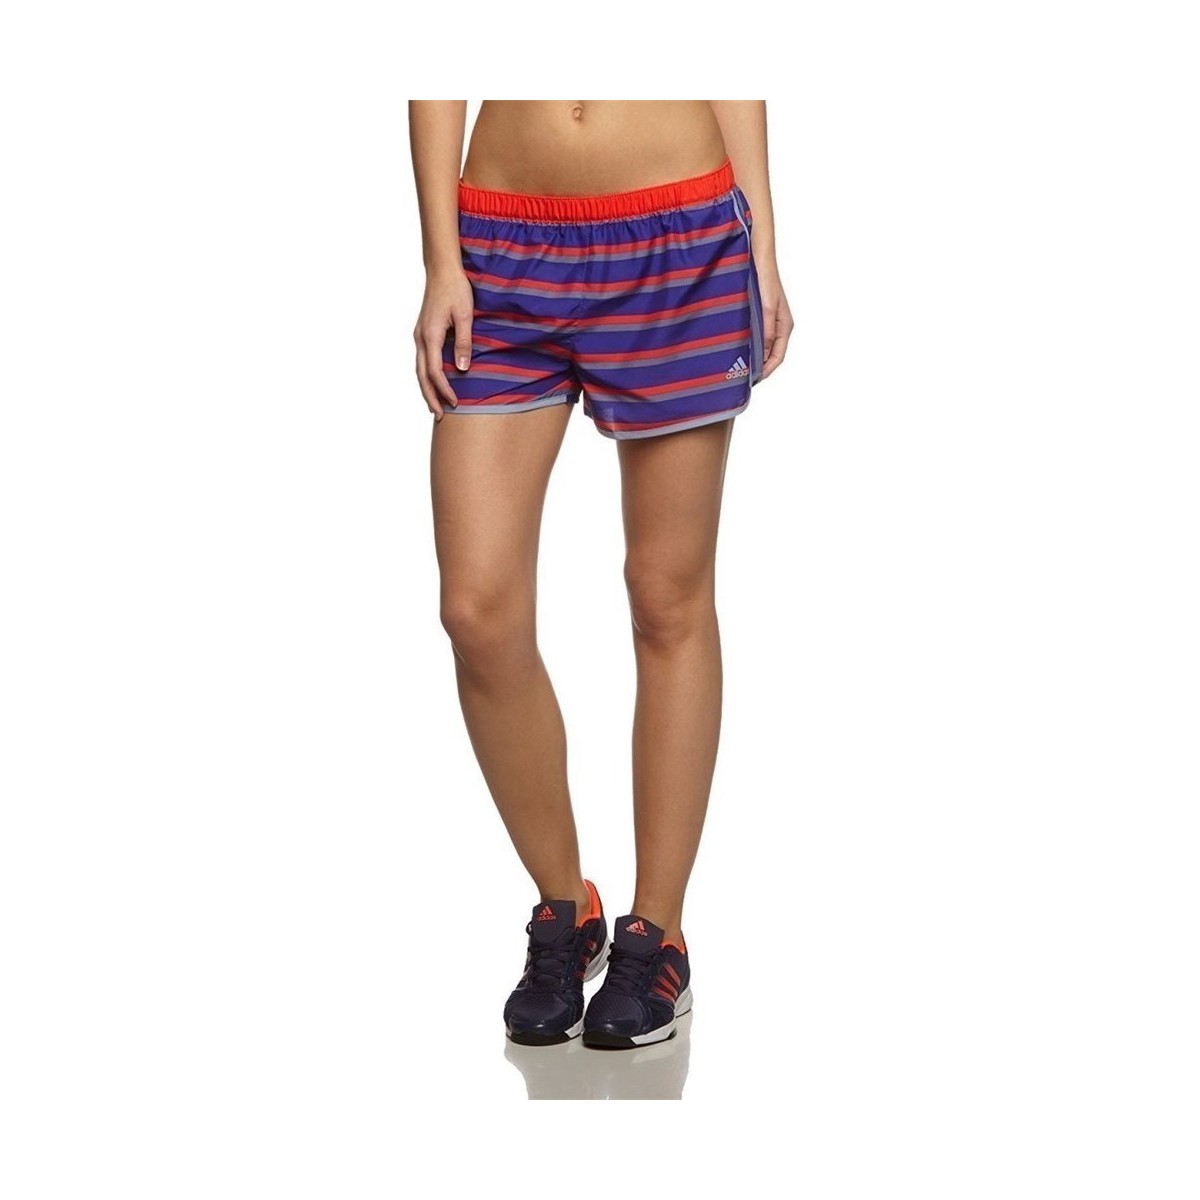 Îmbracaminte Femei Pantaloni trei sferturi adidas Originals Aktive Marathon 10 Shorts Albastre, Portocalie